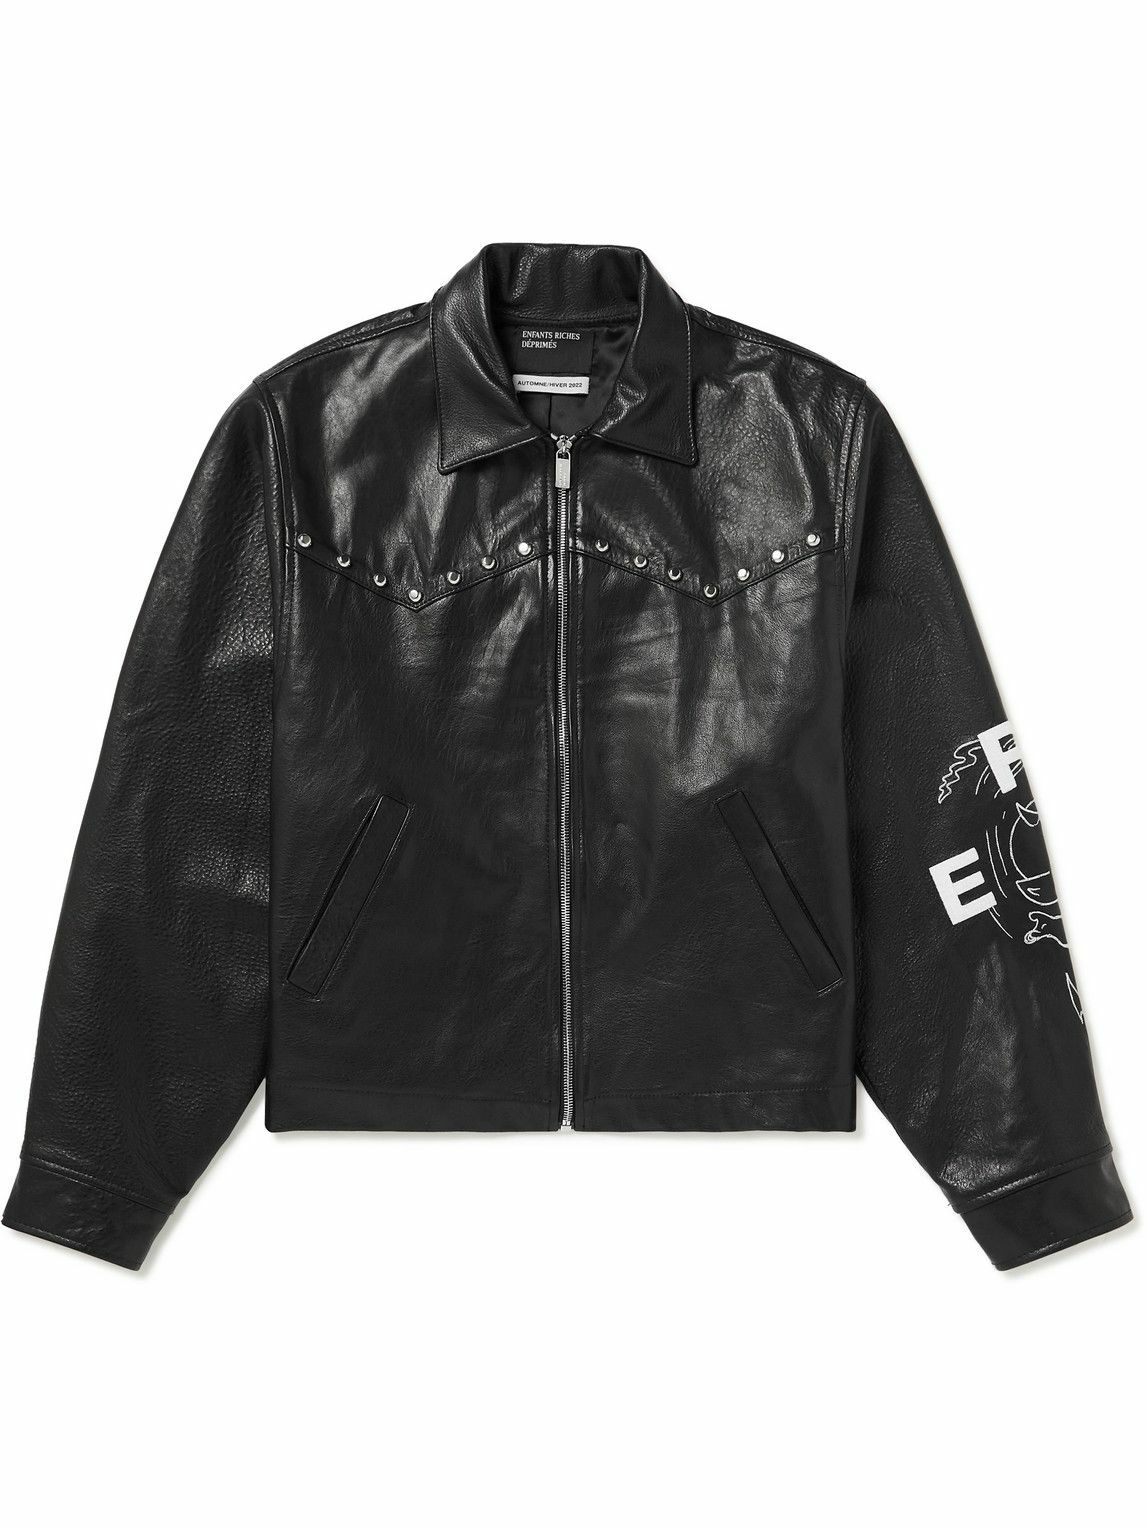 Photo: Enfants Riches Déprimés - Studded Embroidered Leather Jacket - Black